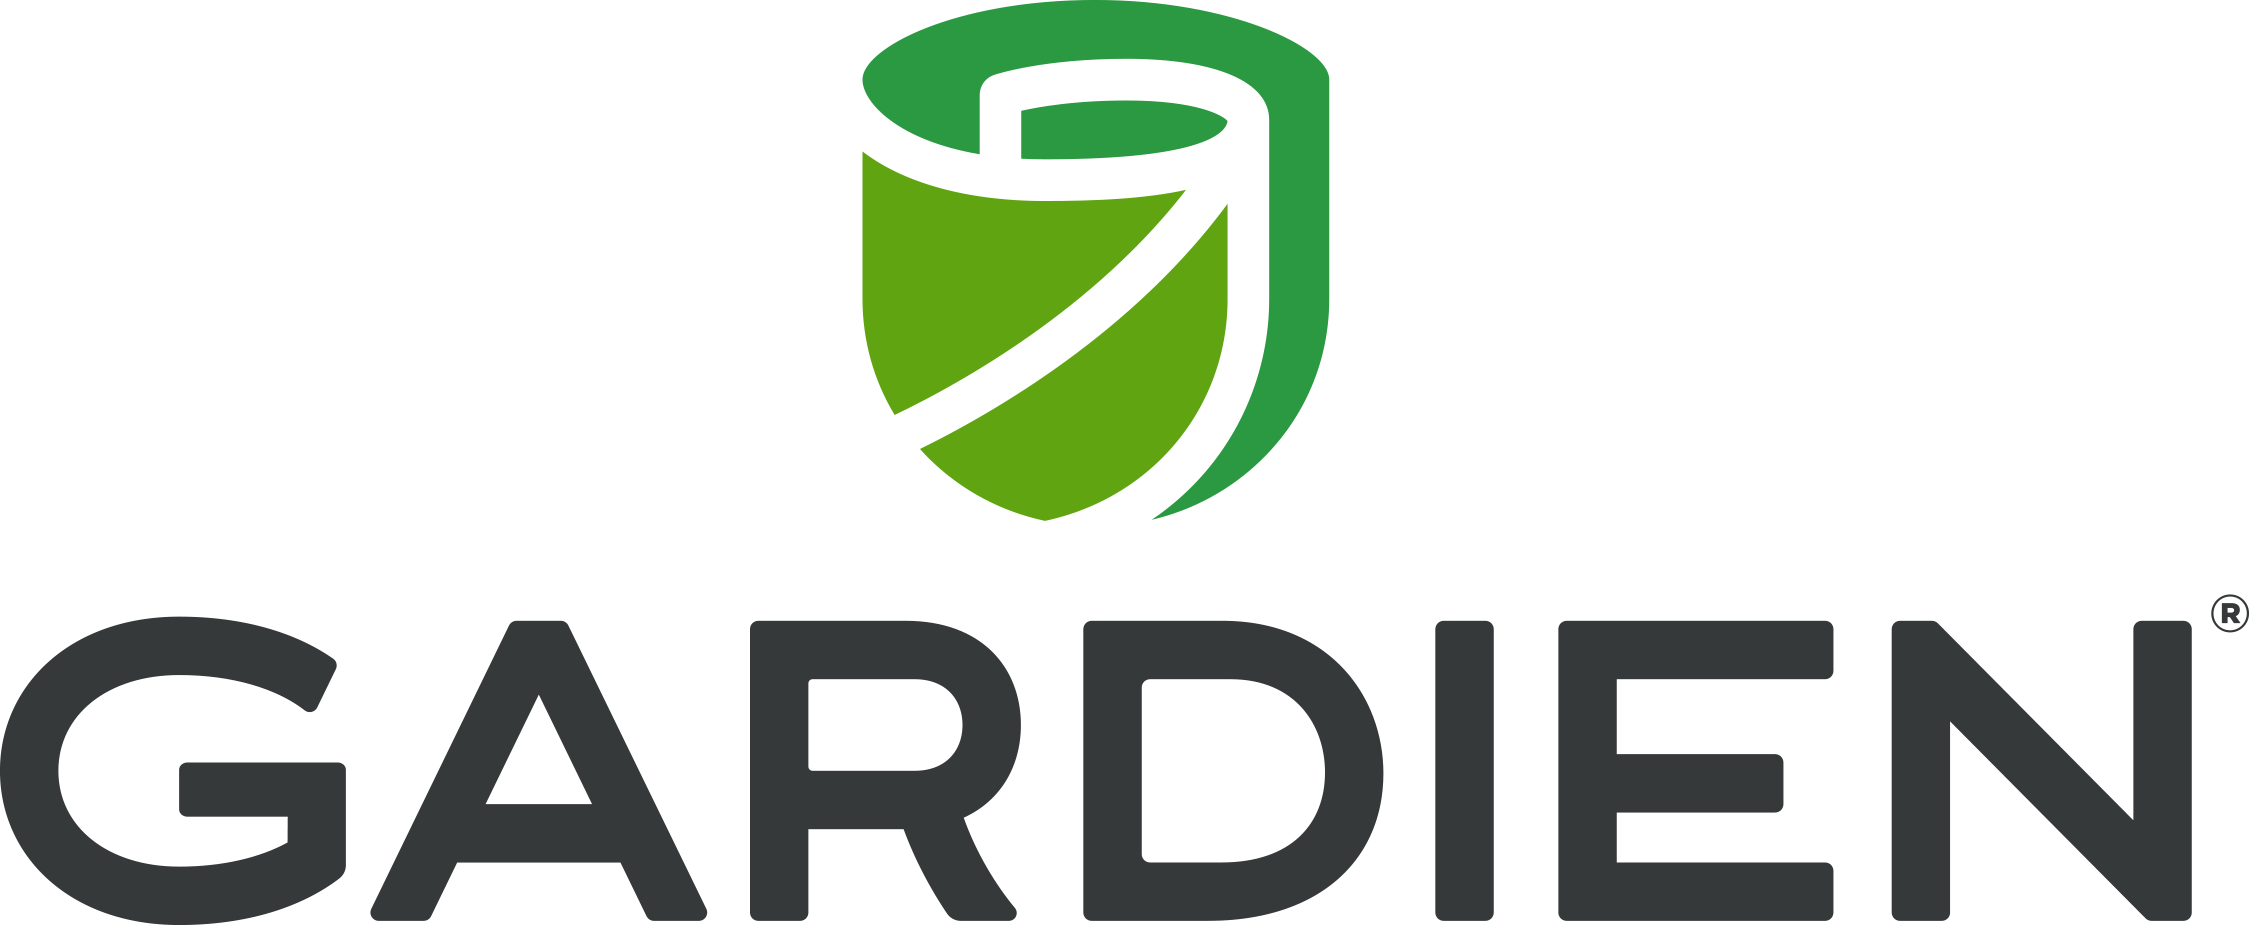 Gardien logo